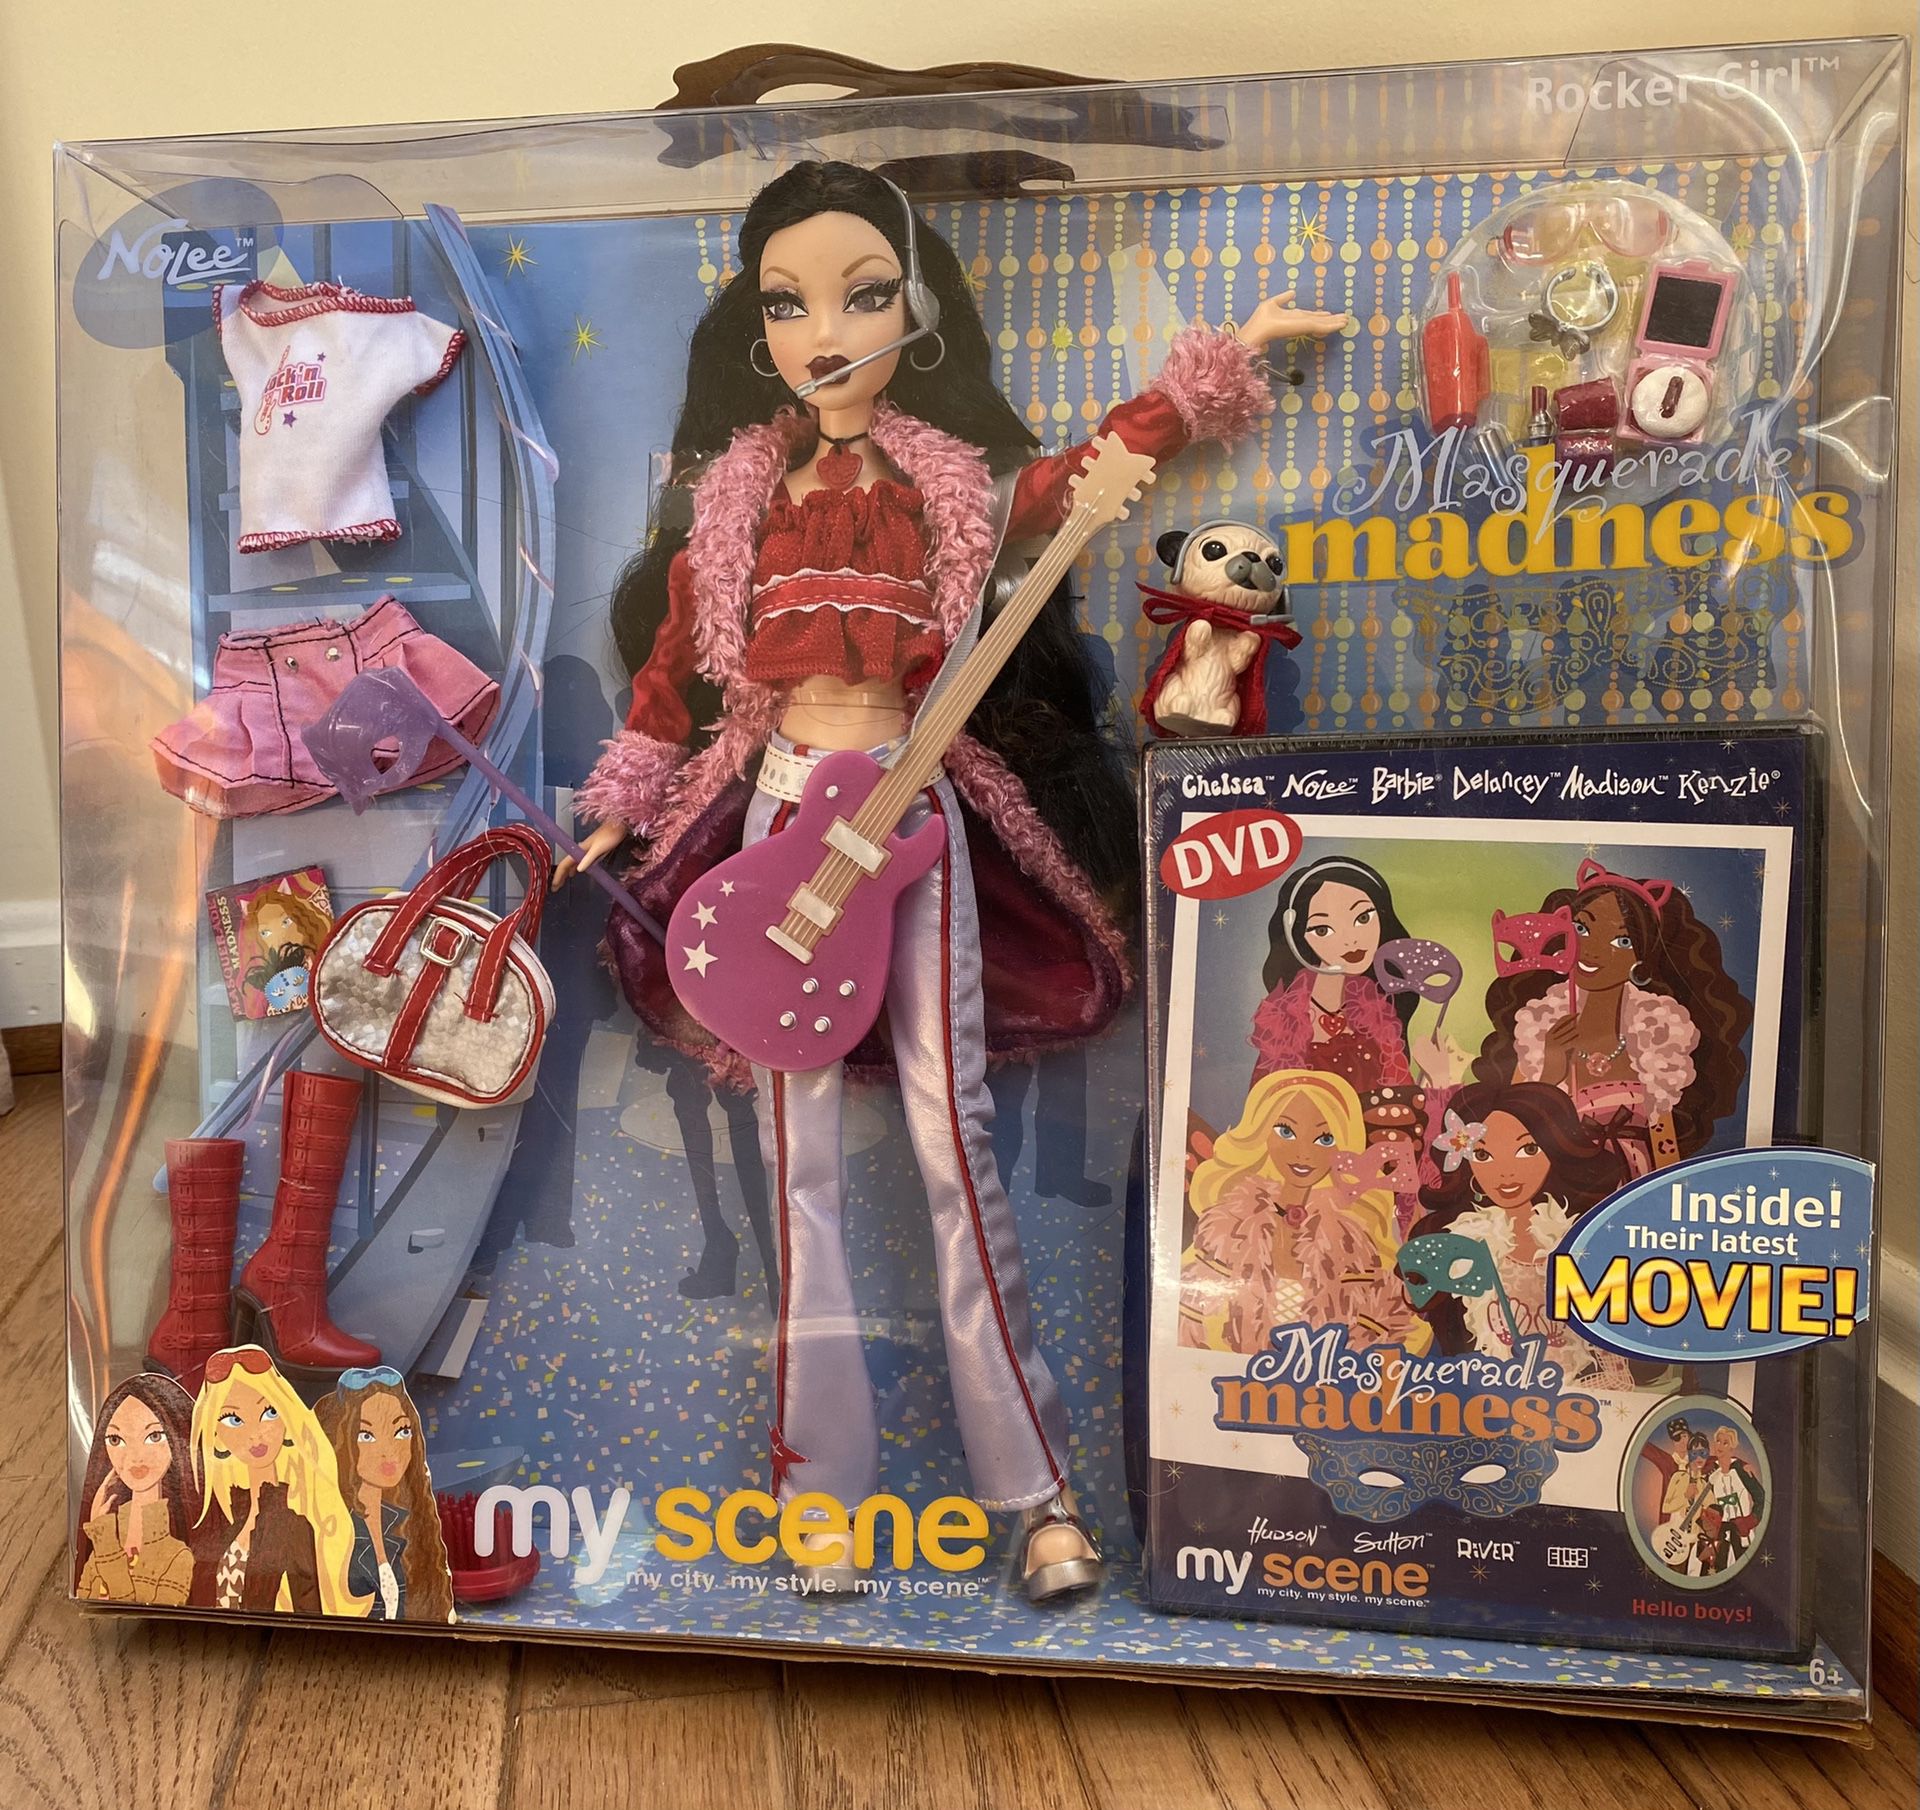 RARE 2004 VINTAGE FIGURES MY SCENE "MASQURADE MADNESS" ROCKER GIRL NOLEE DOLL + DVD ENGLISH edition by Mattel ! Barbie dolls collection